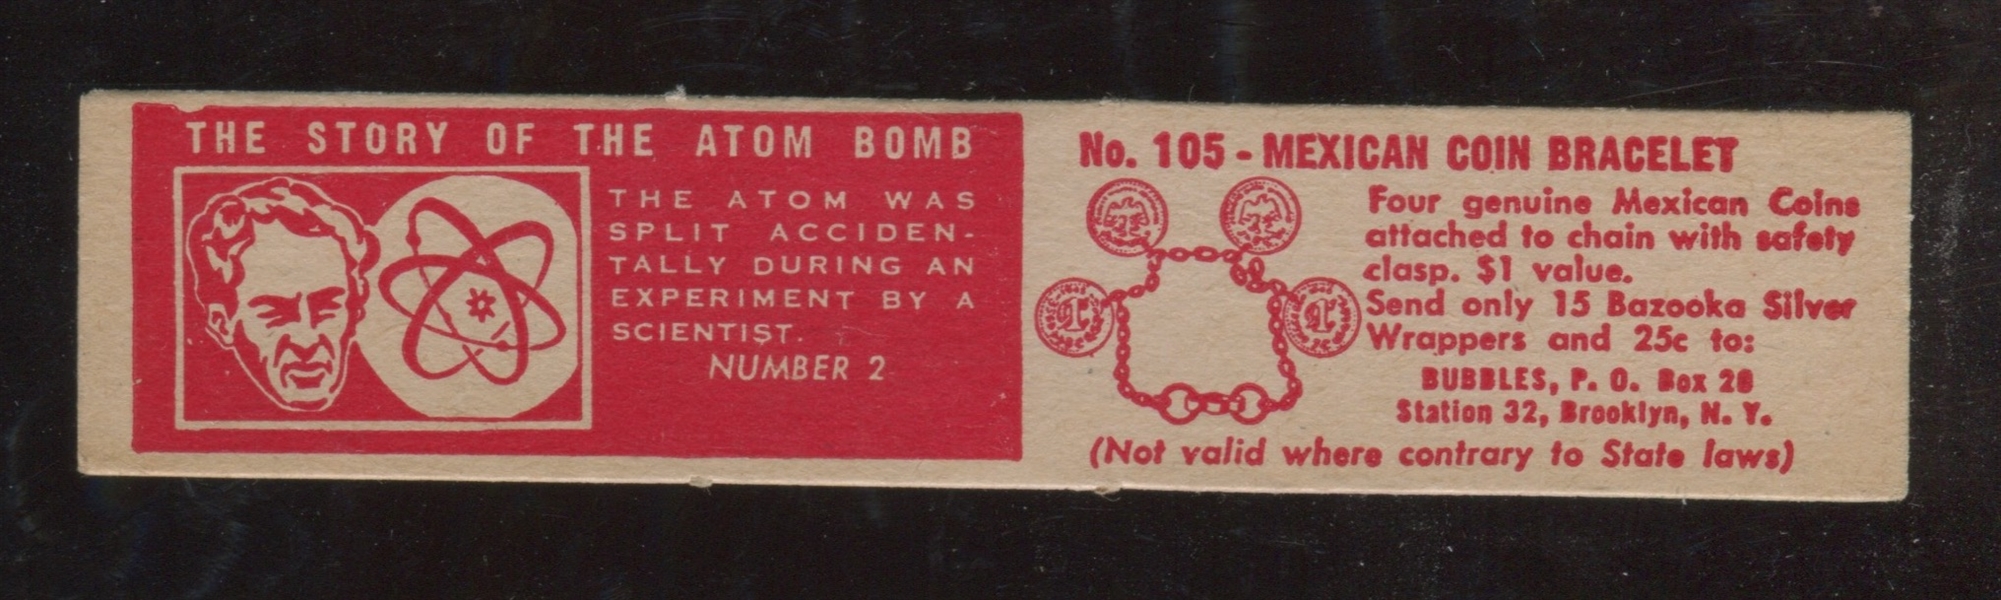 1950's Bazooka Story of the Atom Bomb Tough Type Card #2